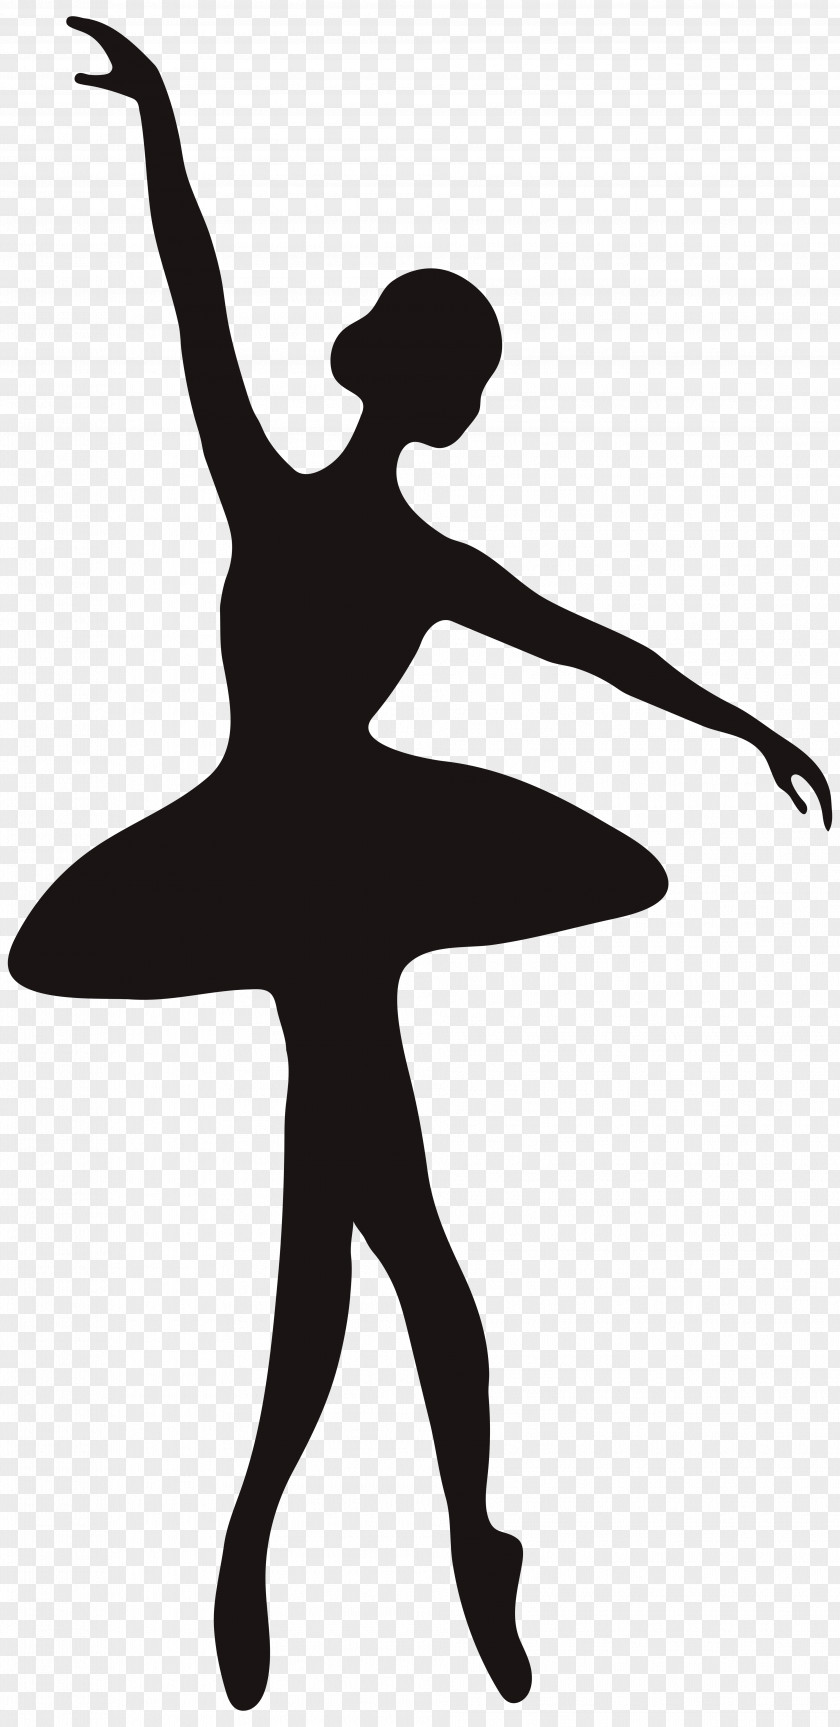 Ballet Dancer Clip Art PNG